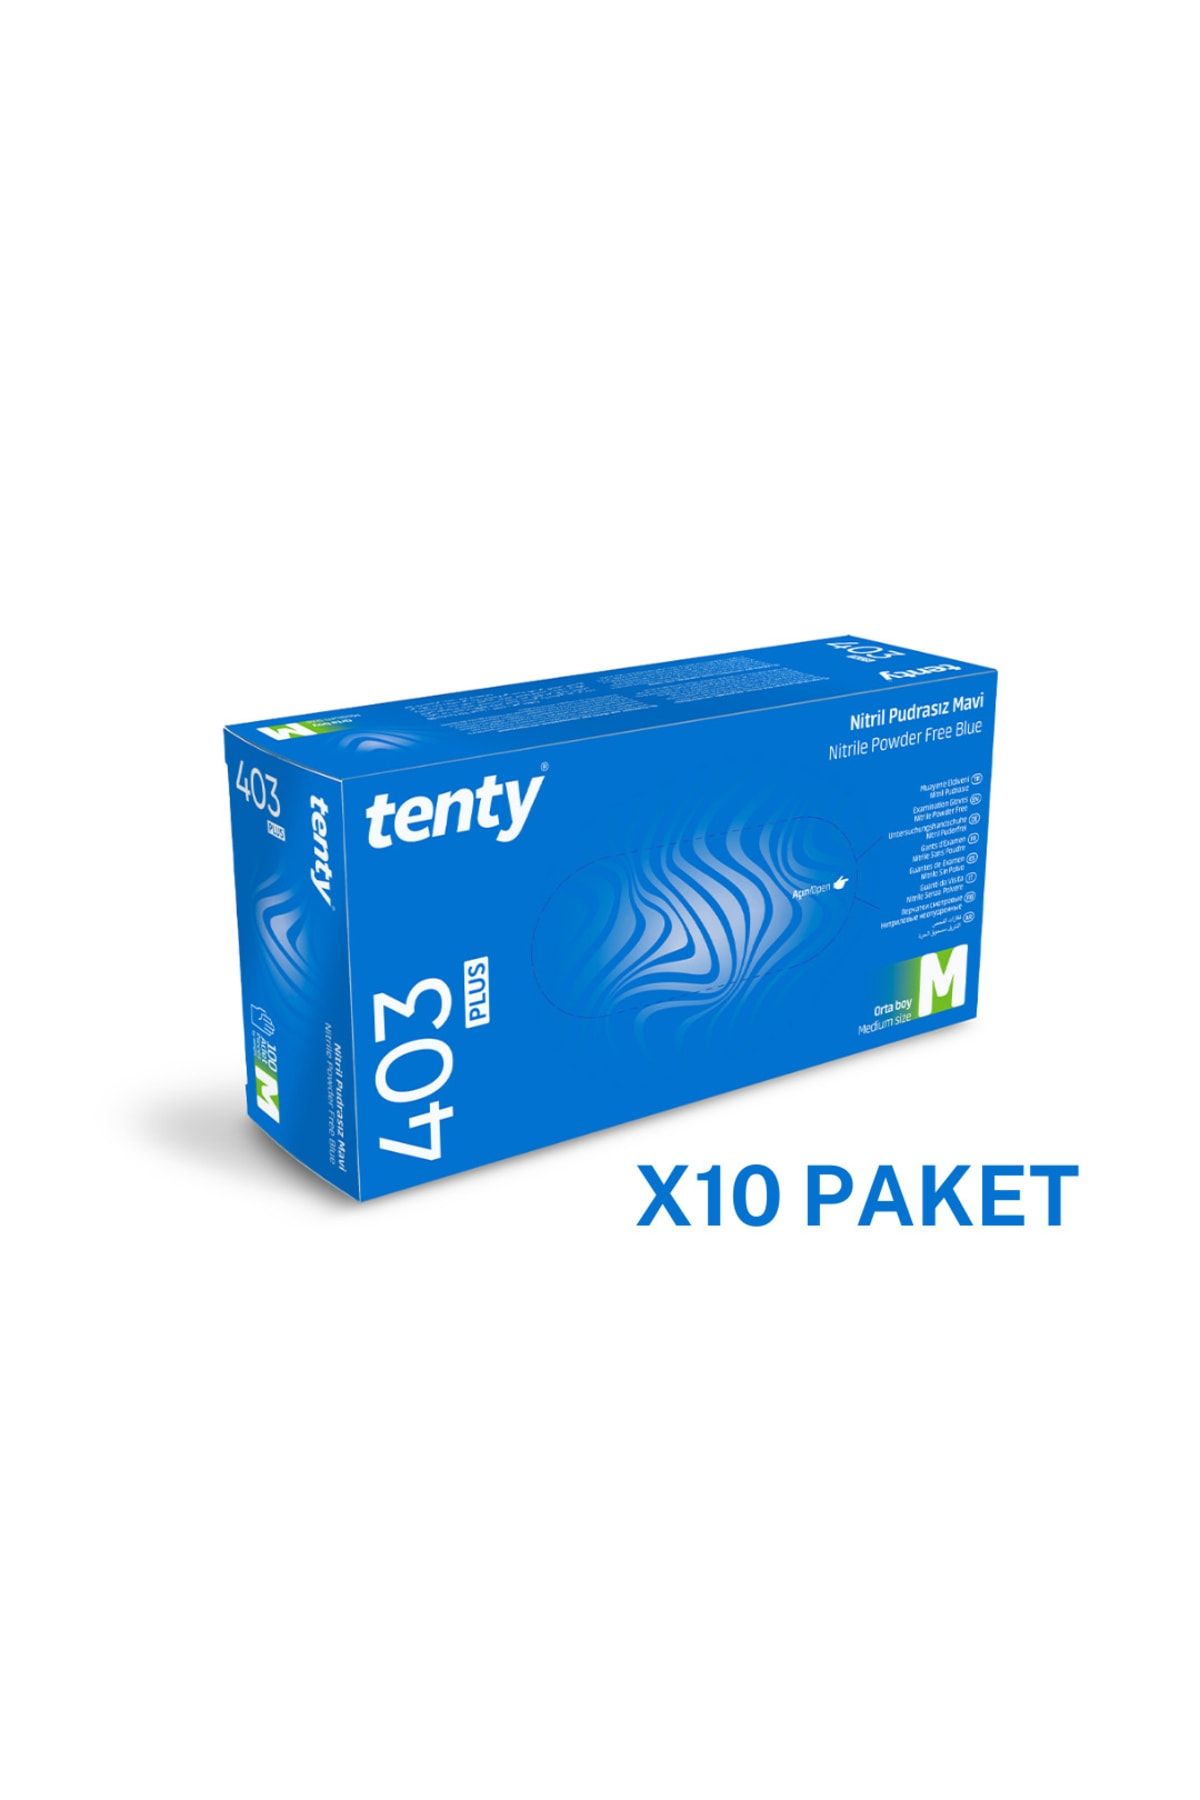 Tenty 403 Plus Medium, Pudrasız, Nitril Muayene Eldiveni 100'lü X10 Paket